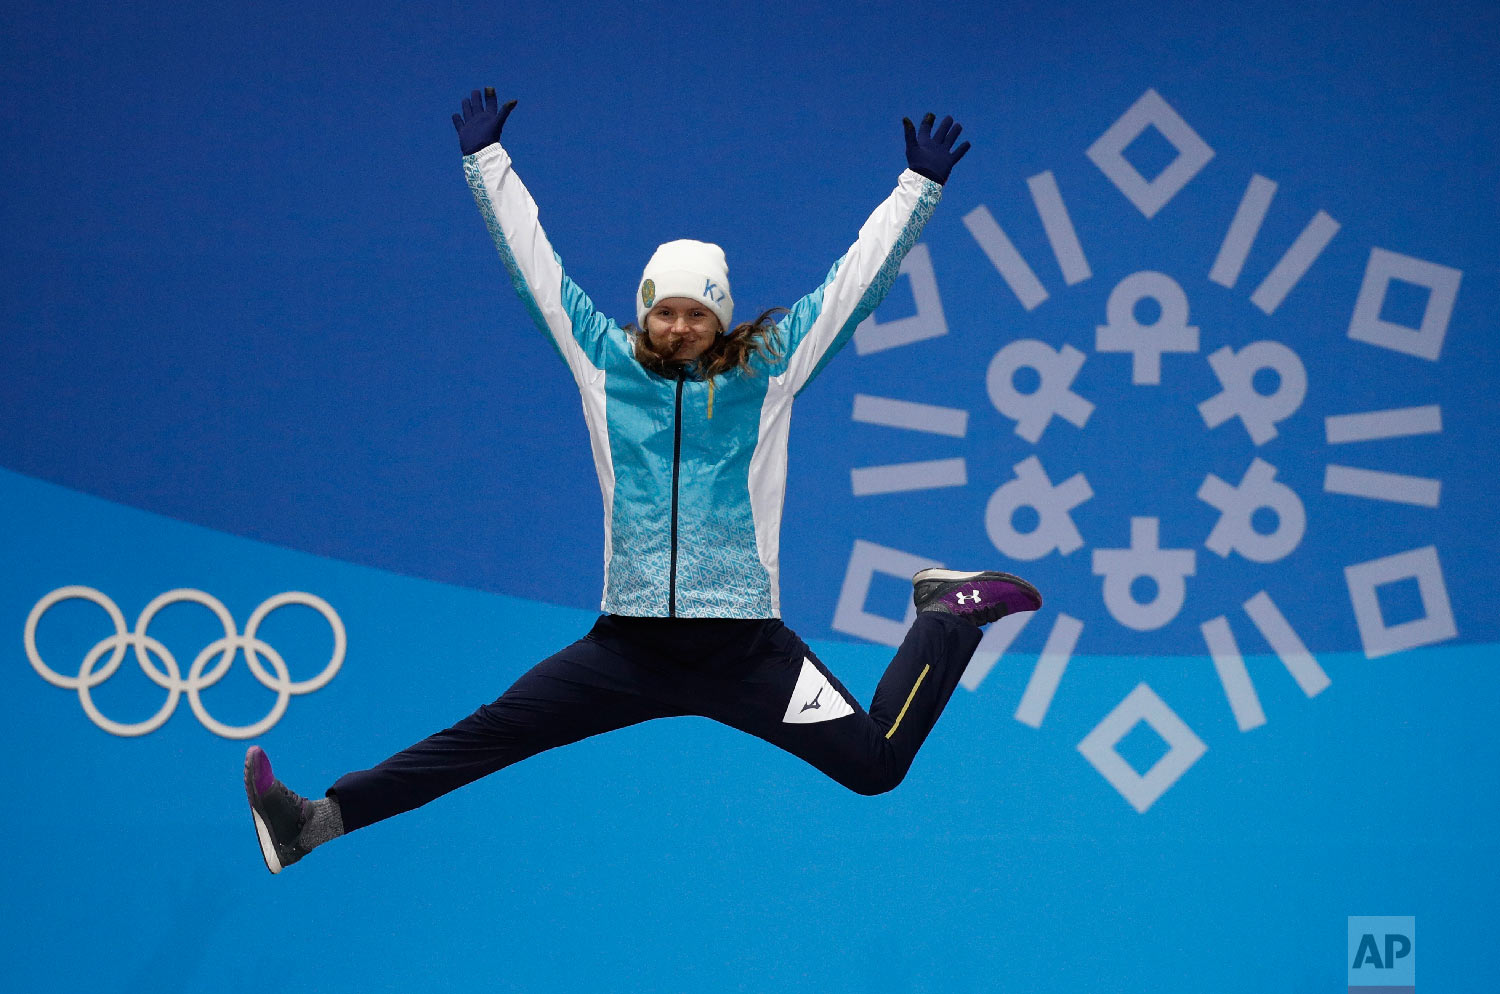  Women's moguls bronze medalist Yulia Galysheva, of Kazakhstan, celebrates during the medals ceremony at the 2018 Winter Olympics in Pyeongchang, South Korea, Monday, Feb. 12, 2018. (AP Photo/Jae C. Hong) 